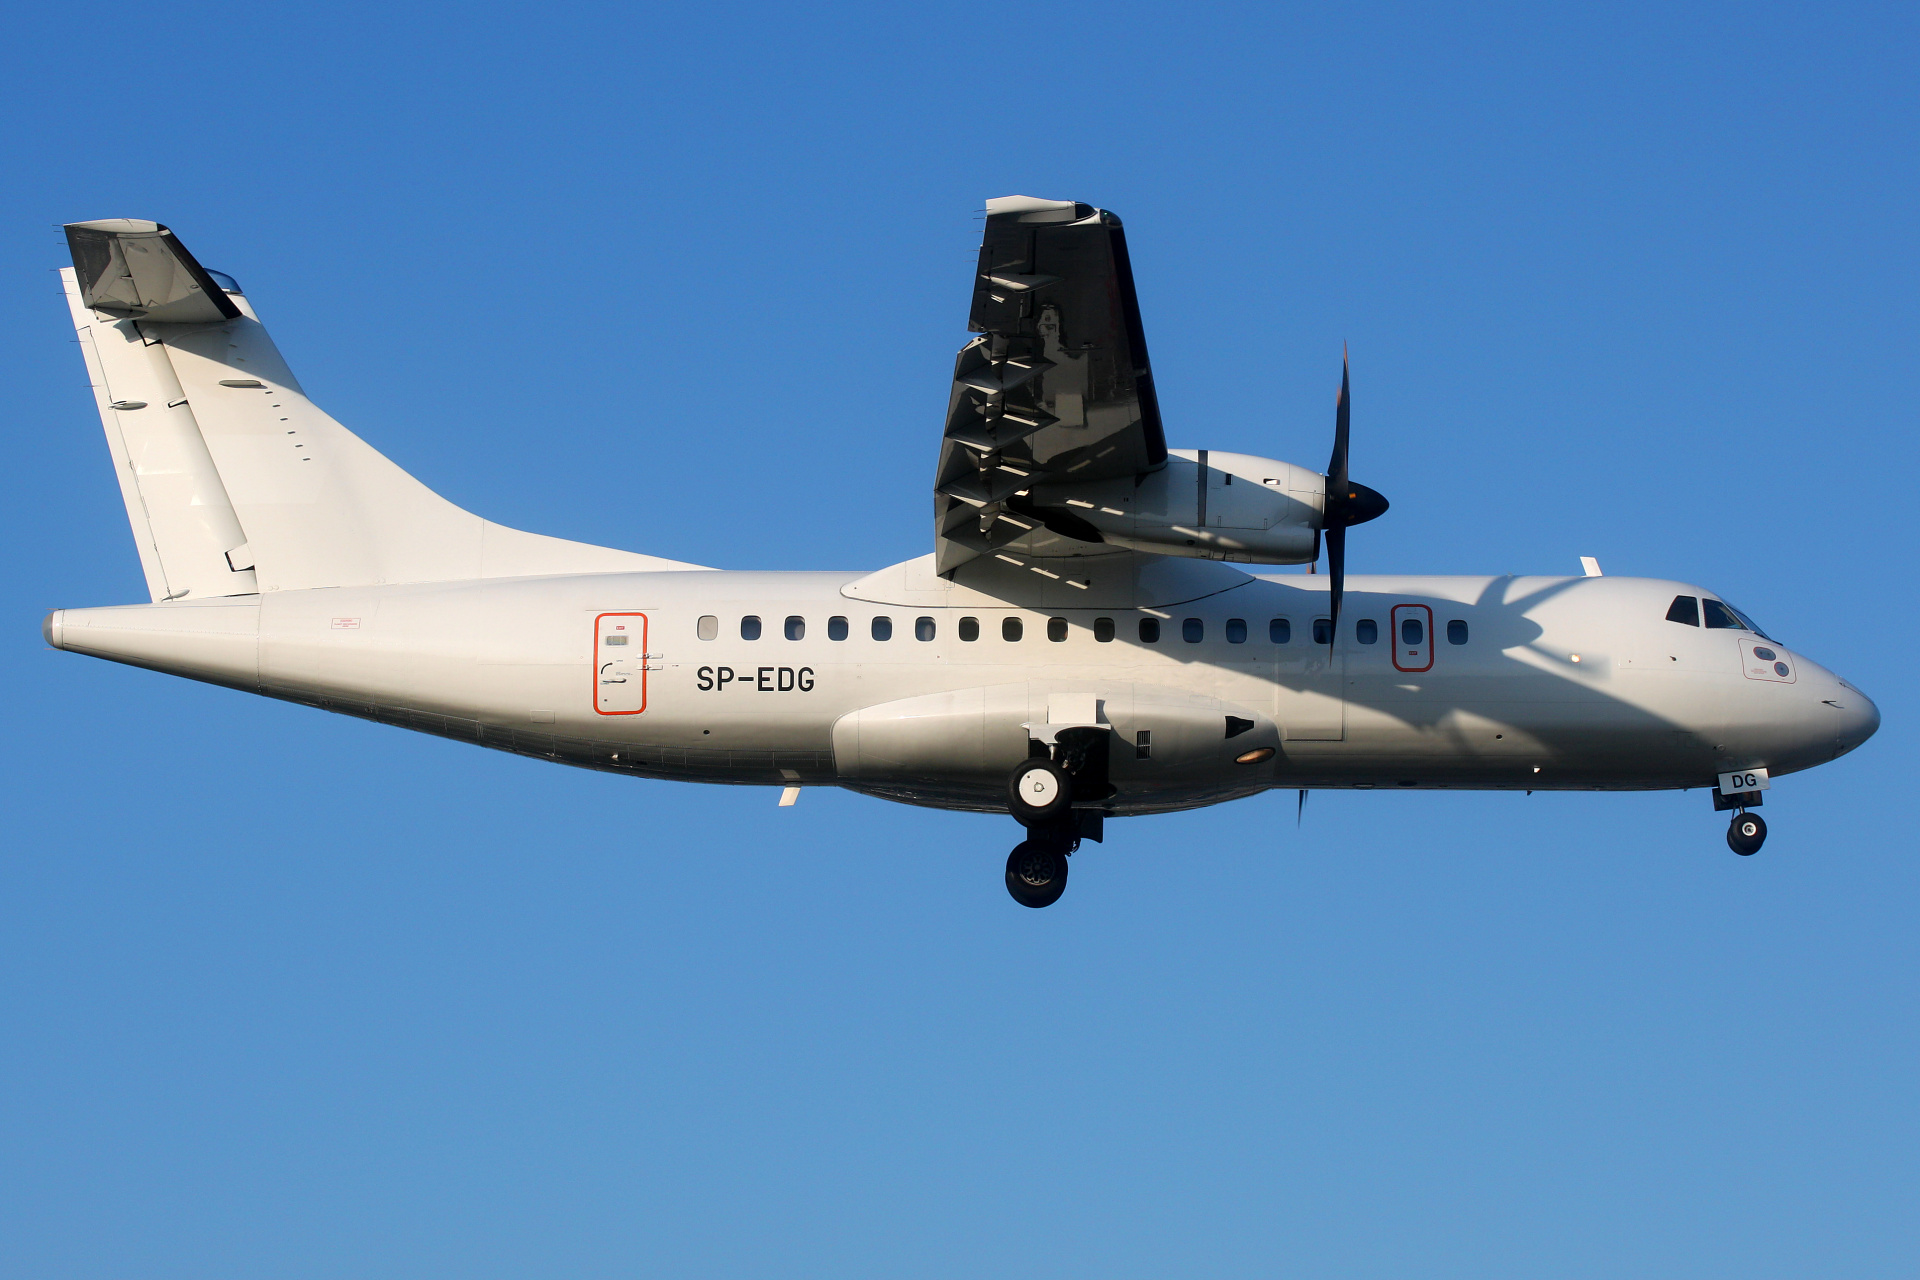 SP-EDG (Samoloty » Spotting na EPWA » ATR 42 » EuroLOT)